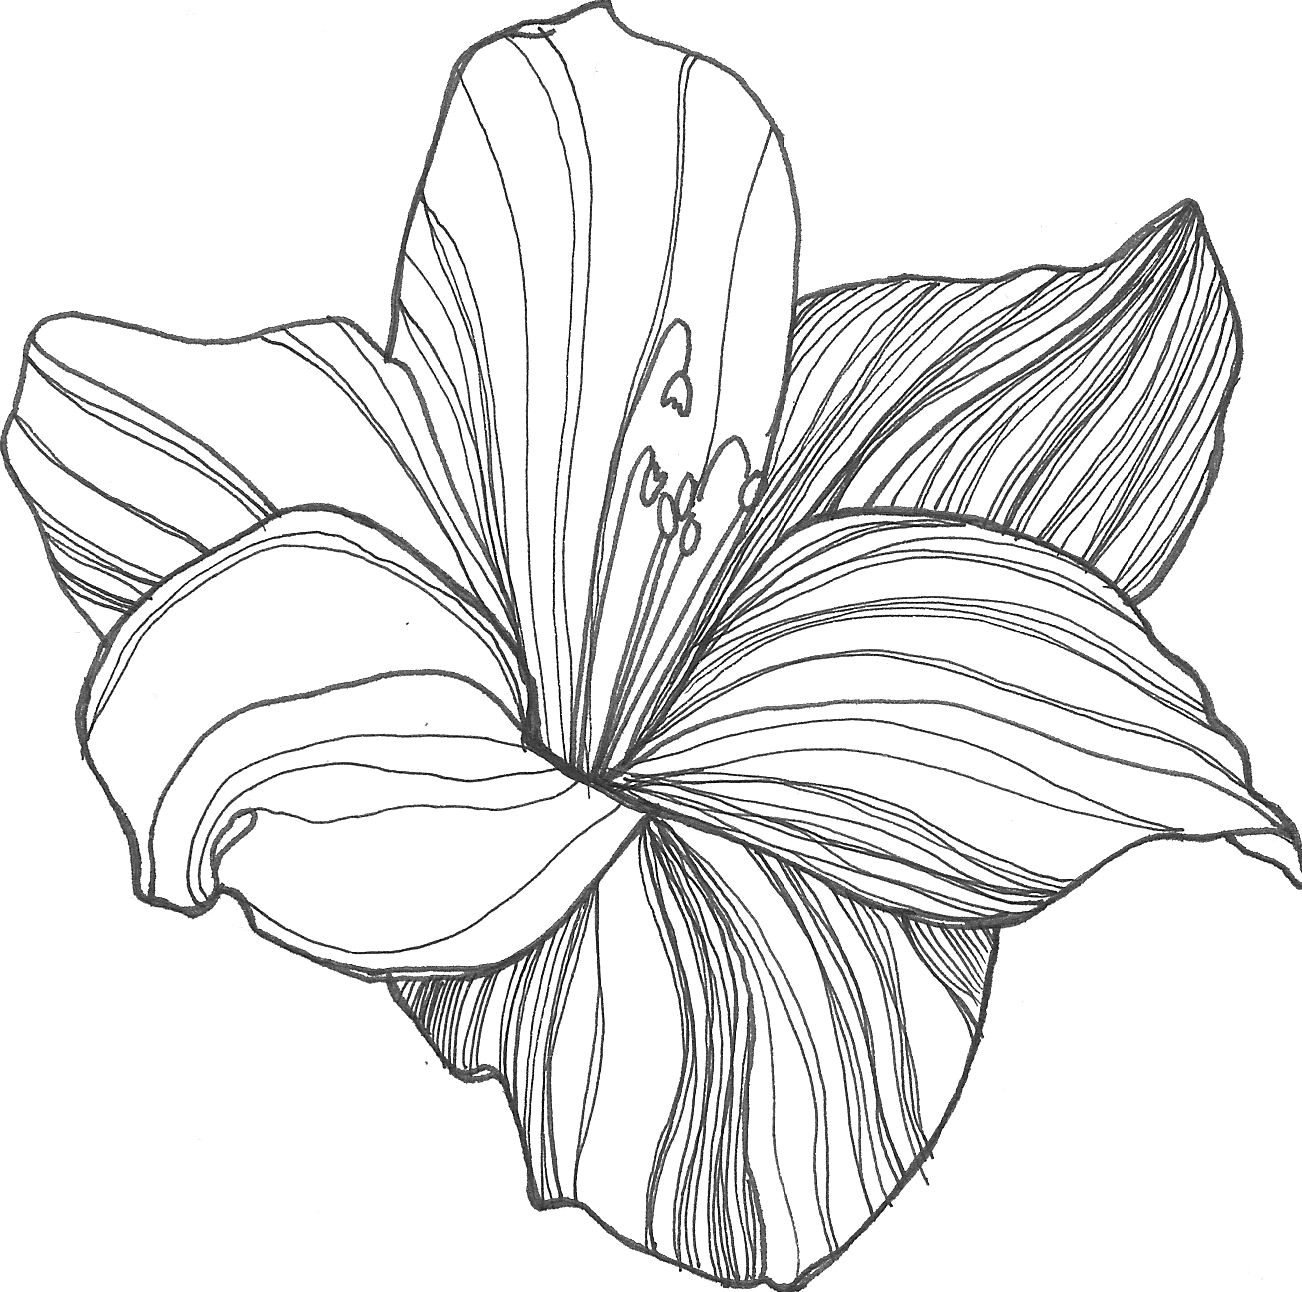 Drawings Of Plumeria Flower Nicole Illustration Flower Power Patterns Drawings Flowers